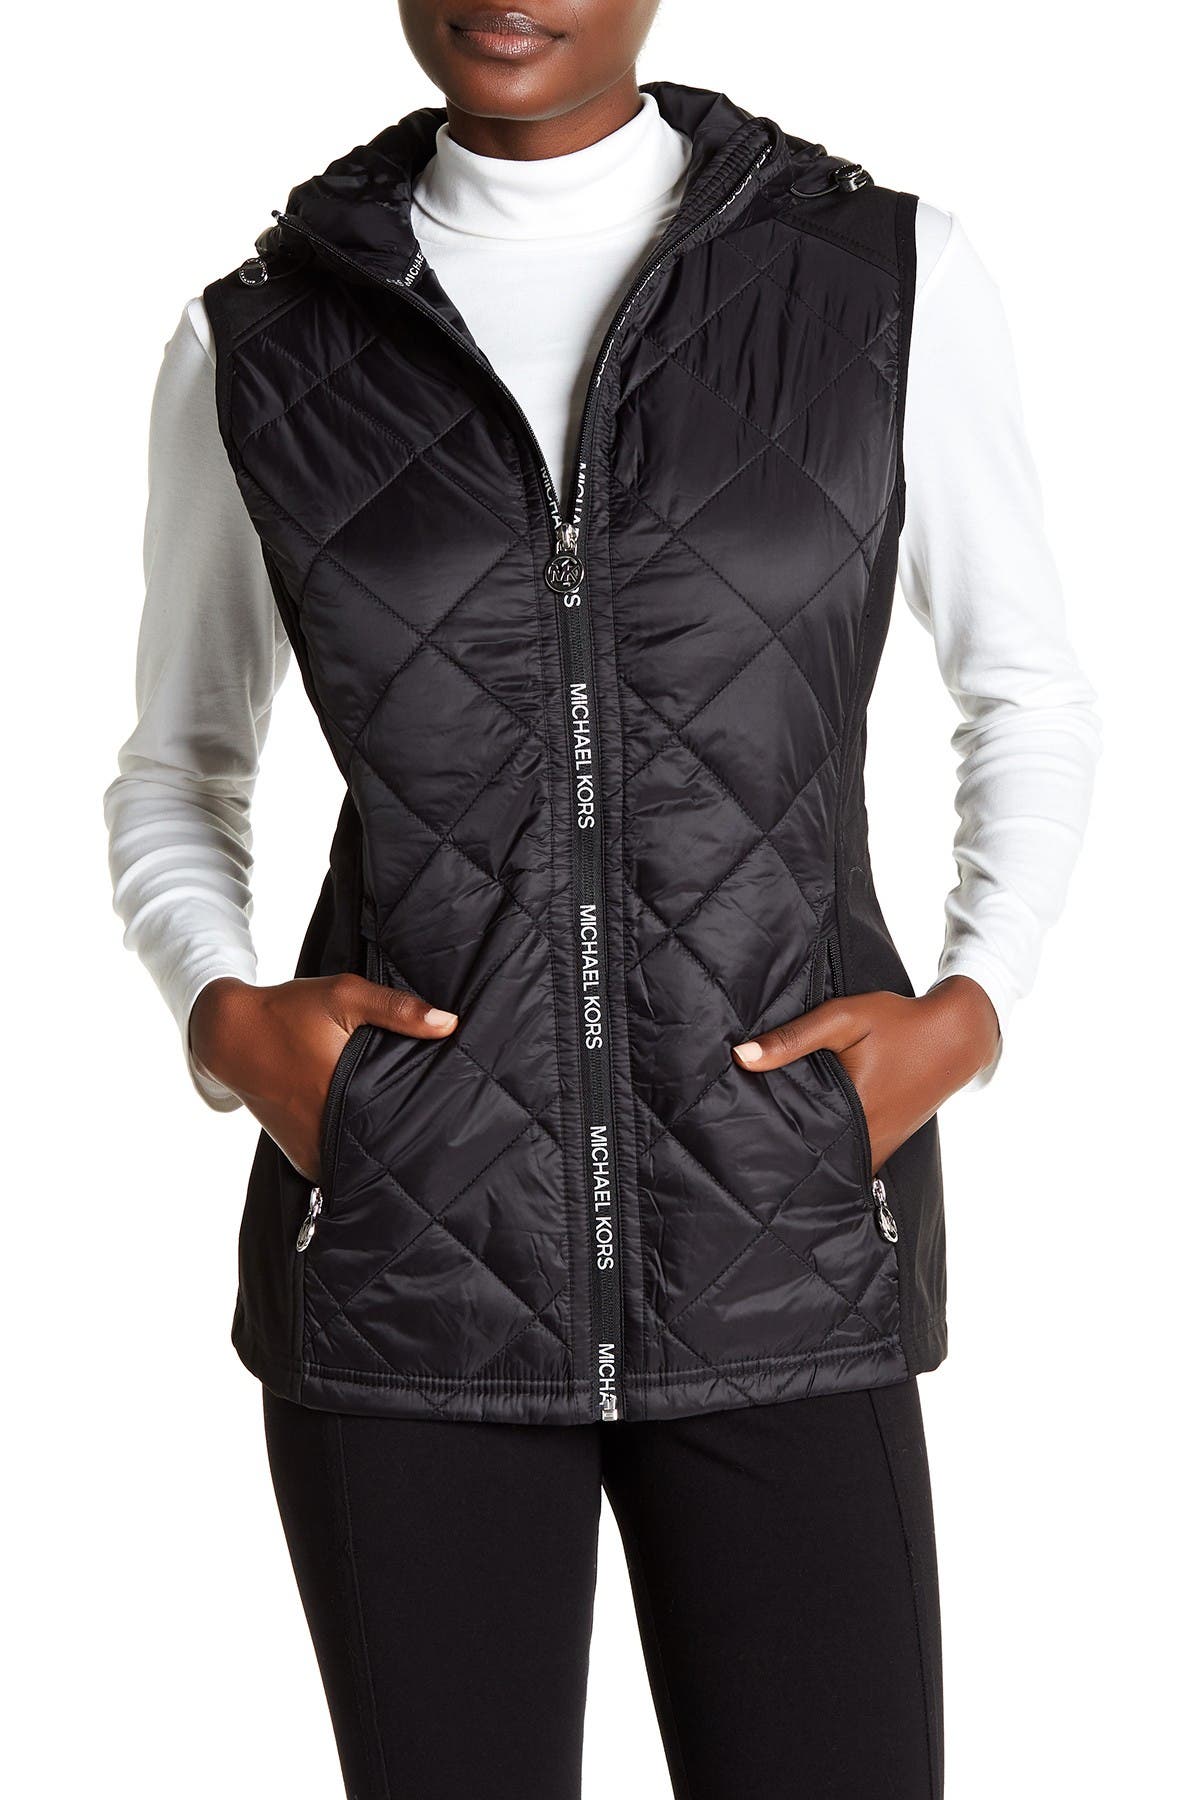 michael kors vest with hood